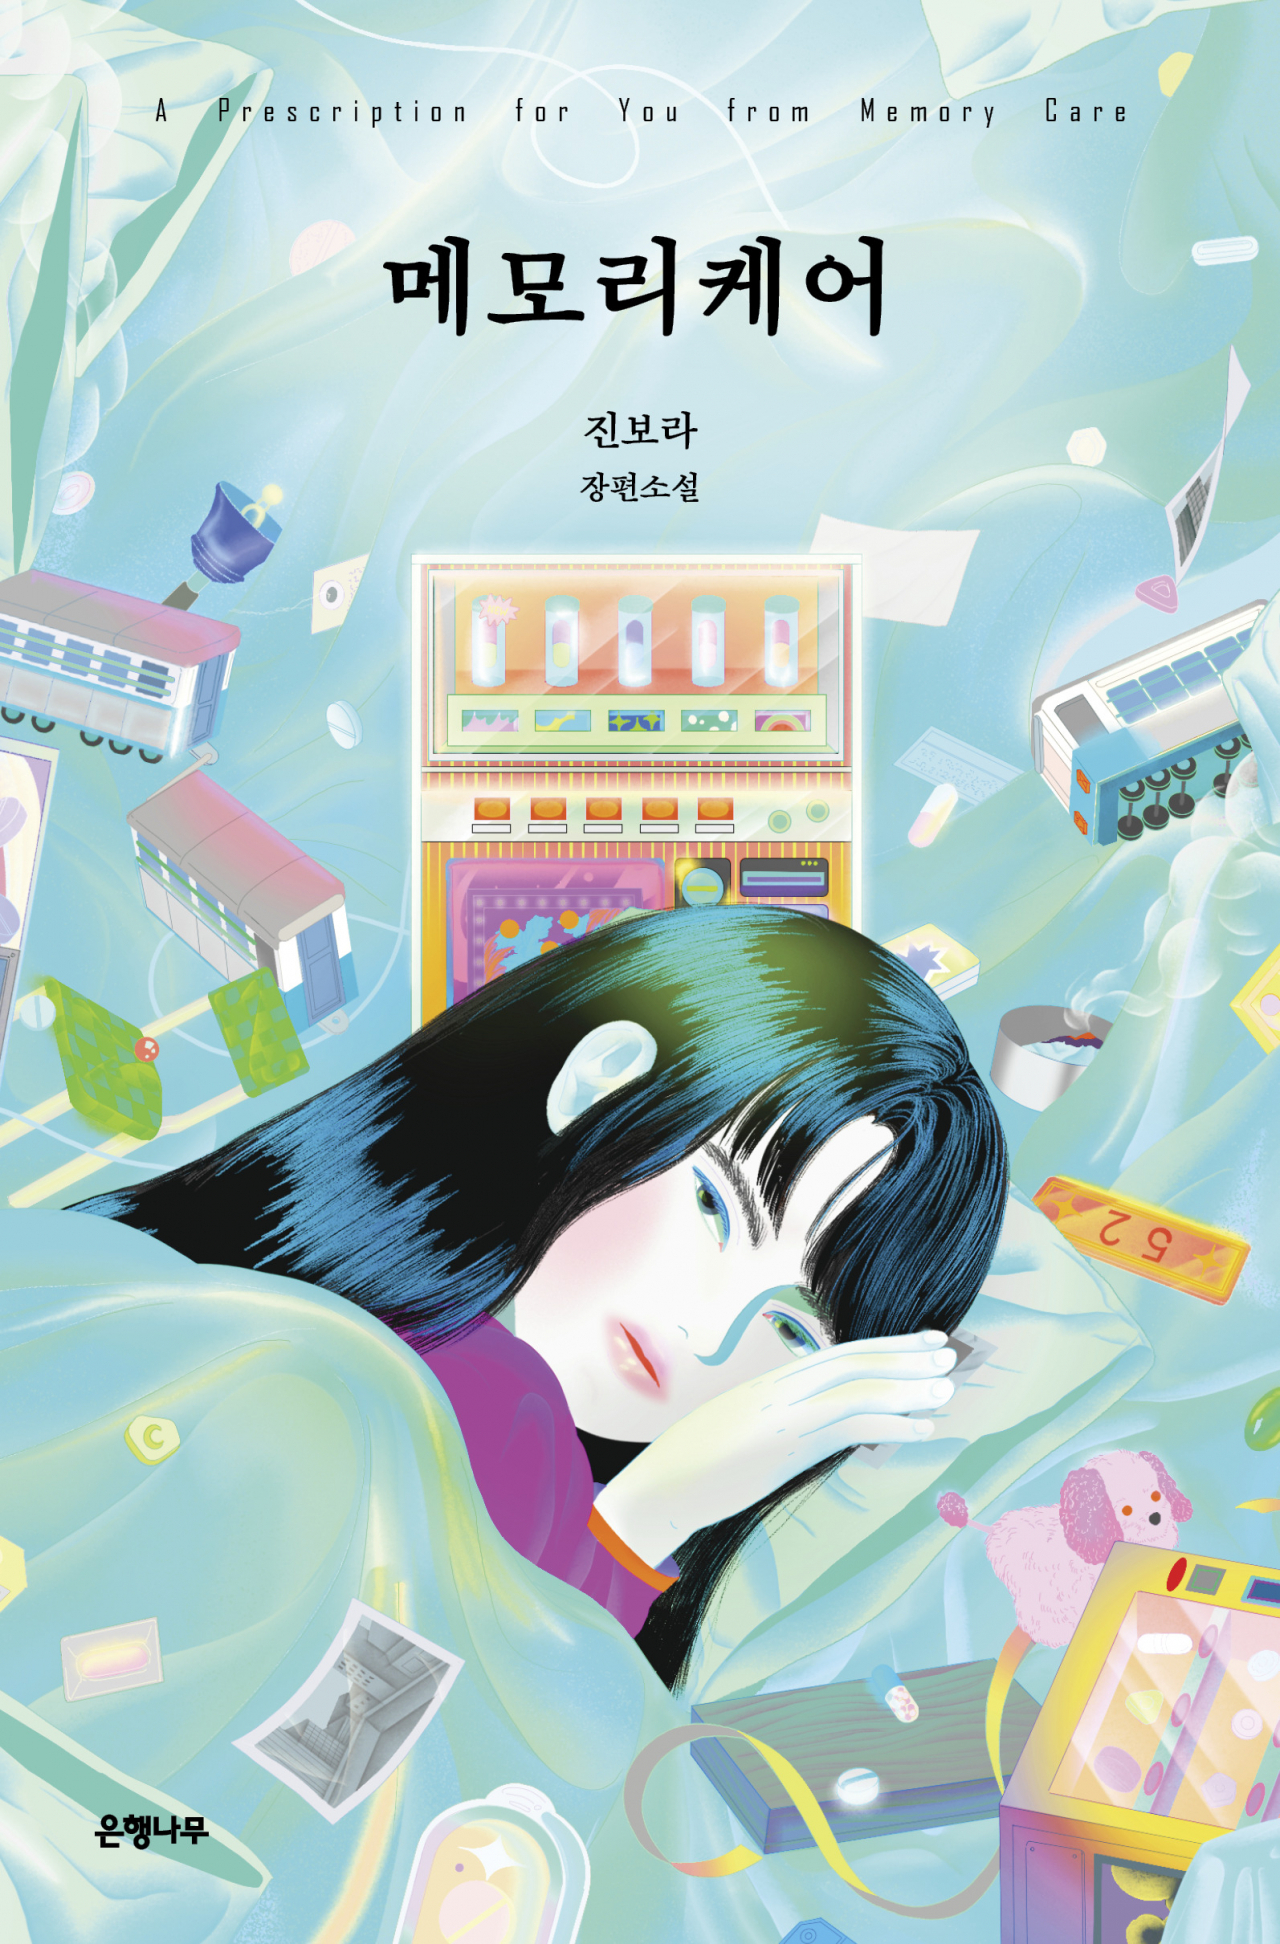 “A Prescription for You From Memory Care” by Bora Jin (EunHaeng NaMu Publishing)